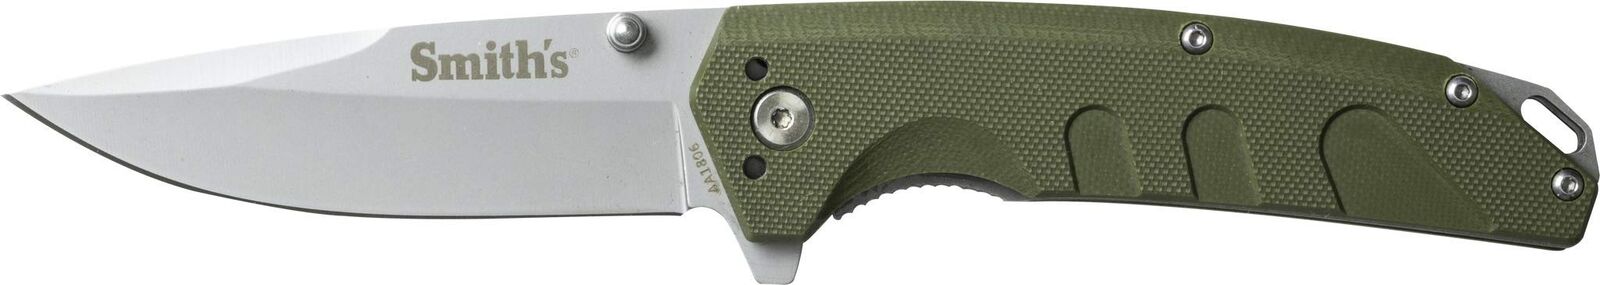 Smith\'s 50993 Rally Knife (OD Green)